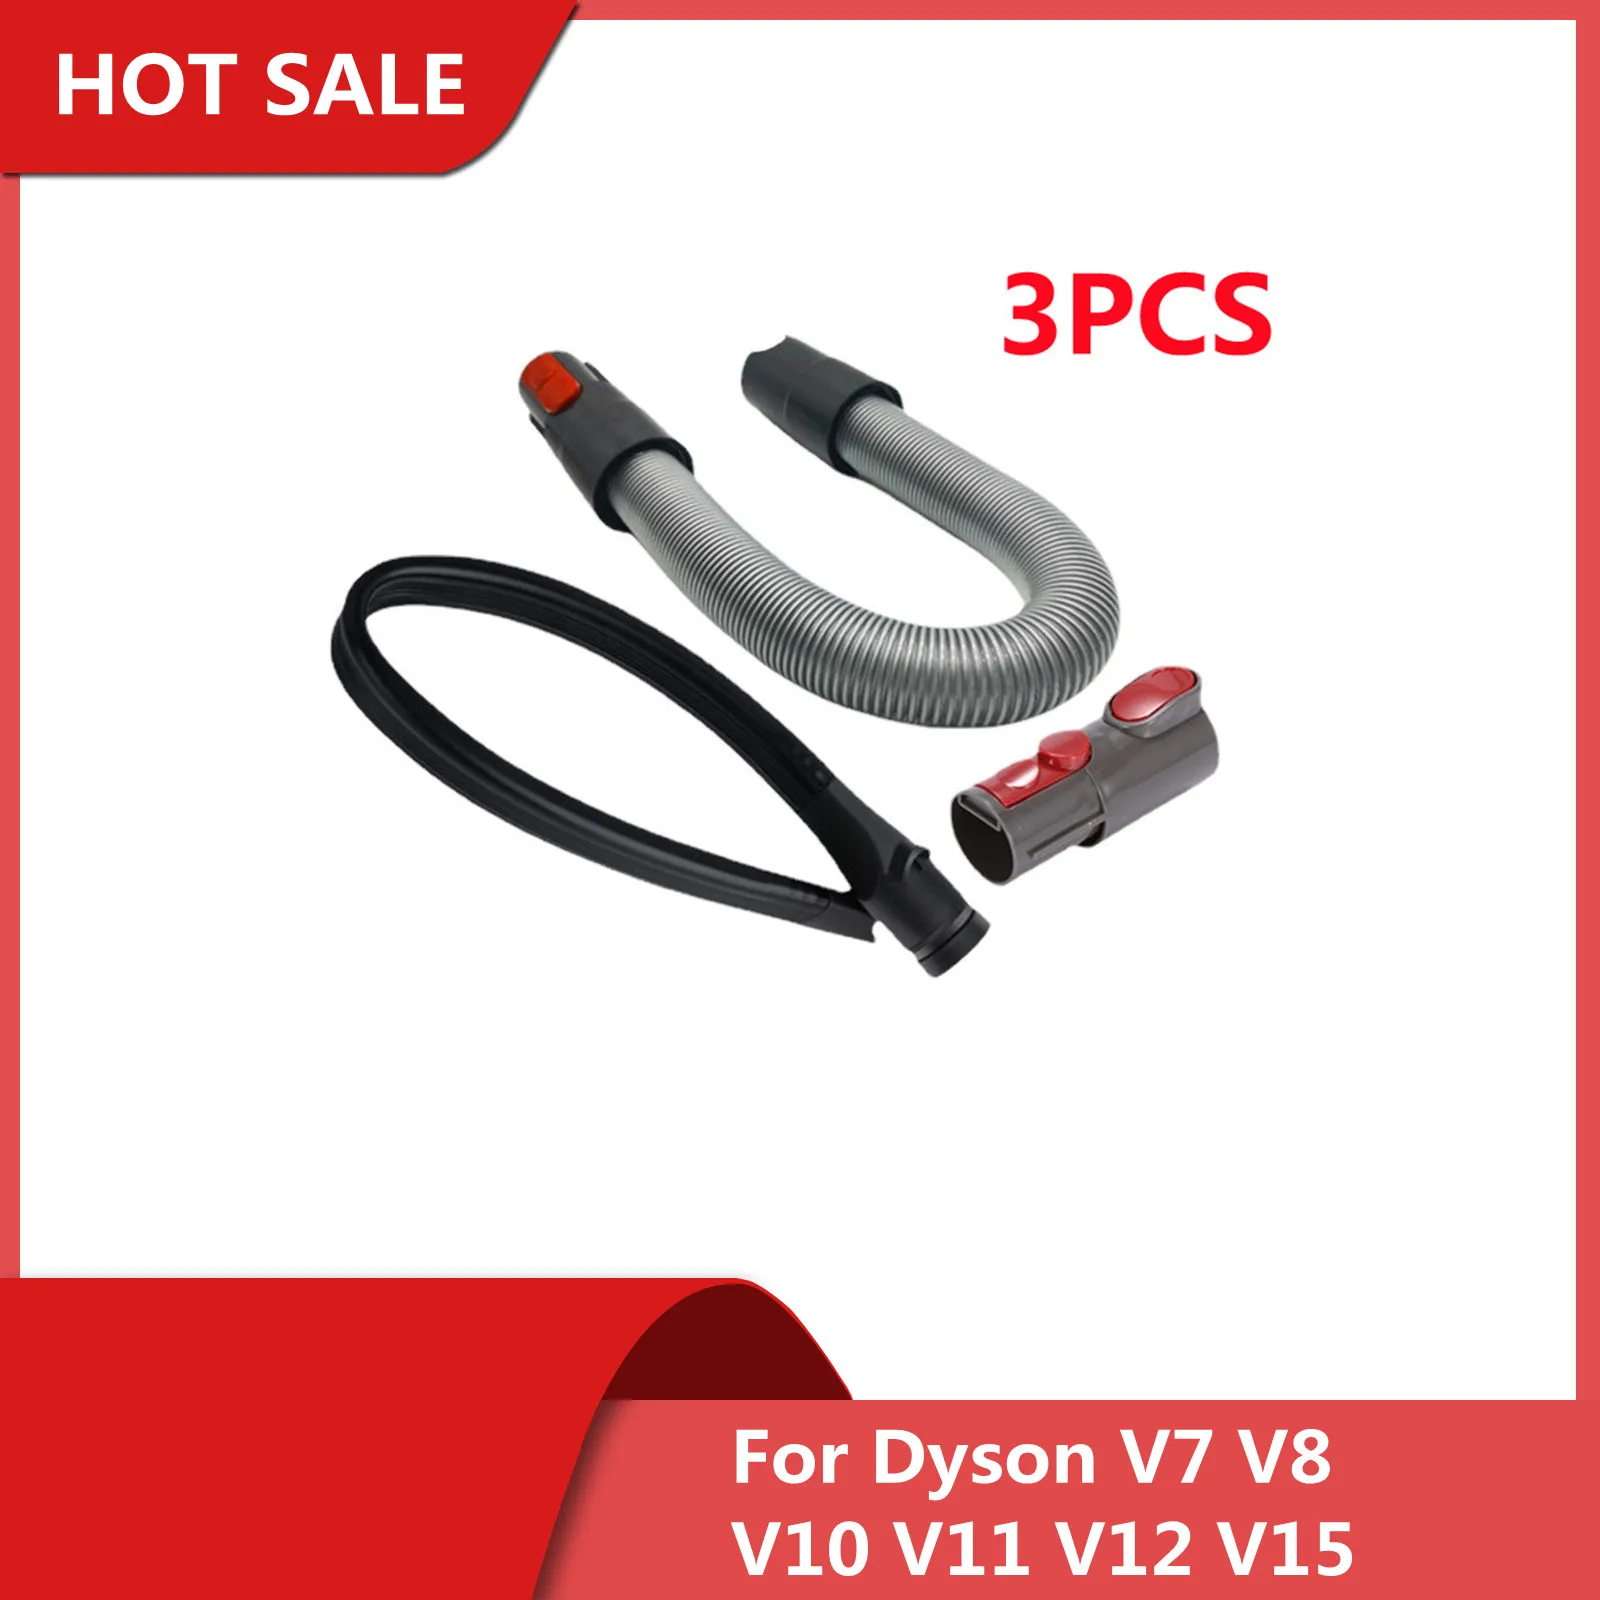 

Flexible Crevice Tool Adapter Hose Kit for Dyson V8 V10 V7 V11 V12 V15 Vacuum Cleaner for As a Connection and Extension